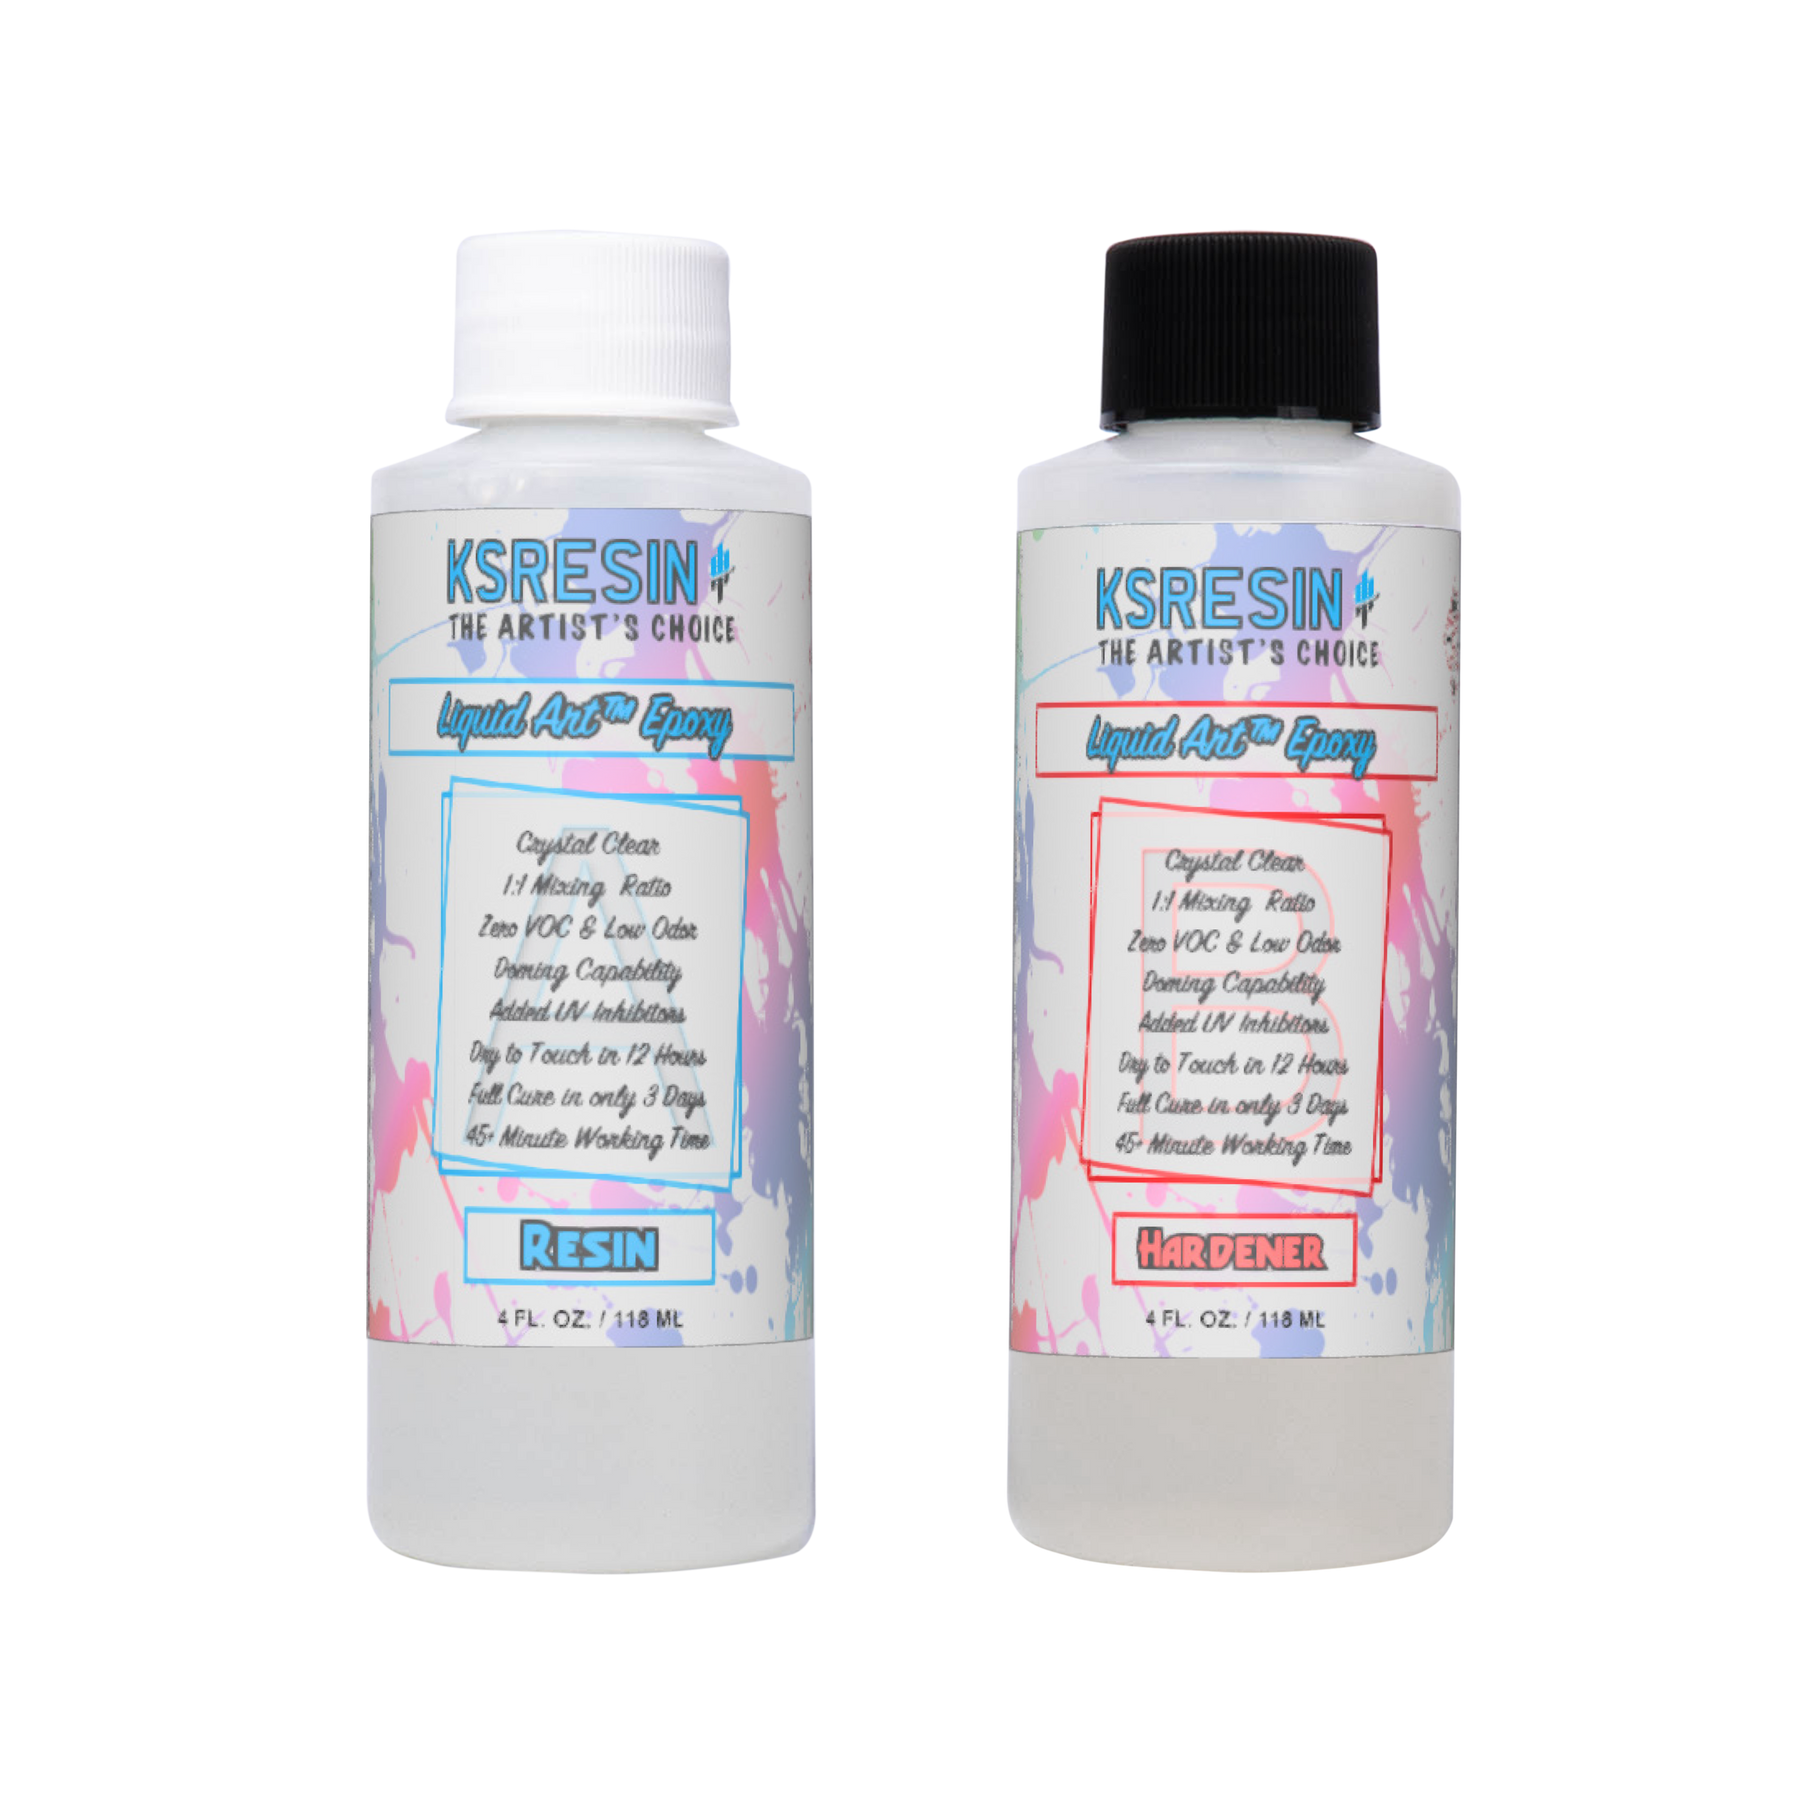 3L Artresin Epoxy Resin Kit